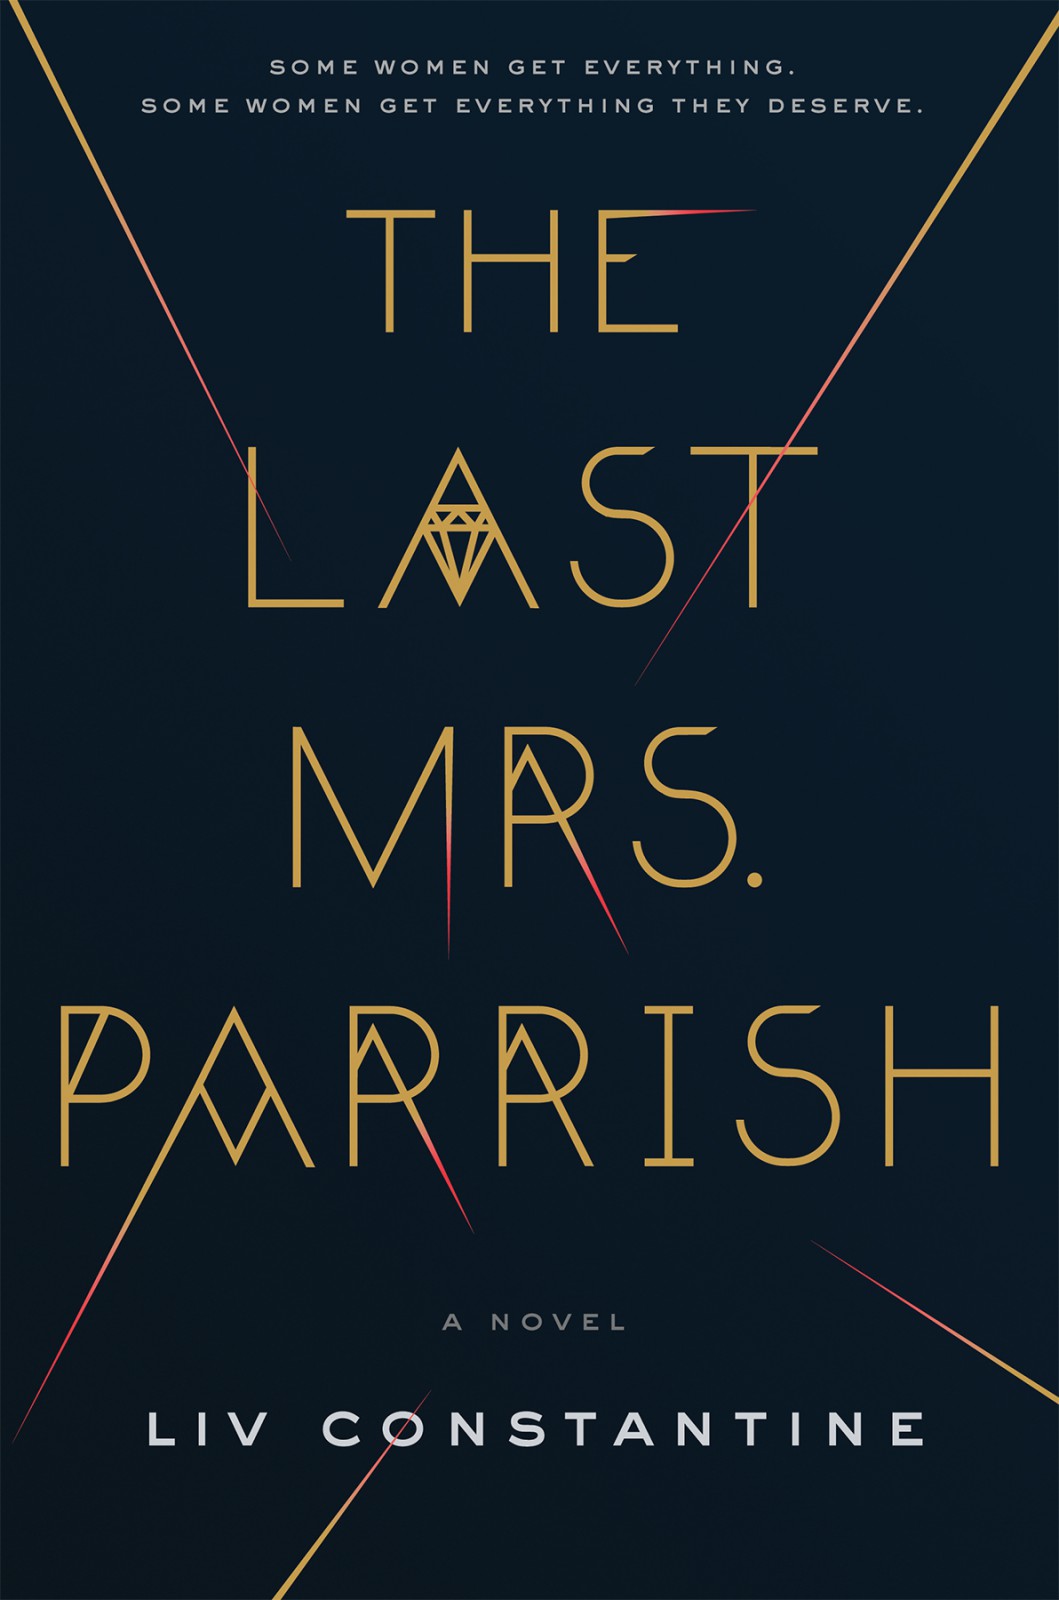 Constantine Liv - The Last Mrs. Parrish скачать бесплатно